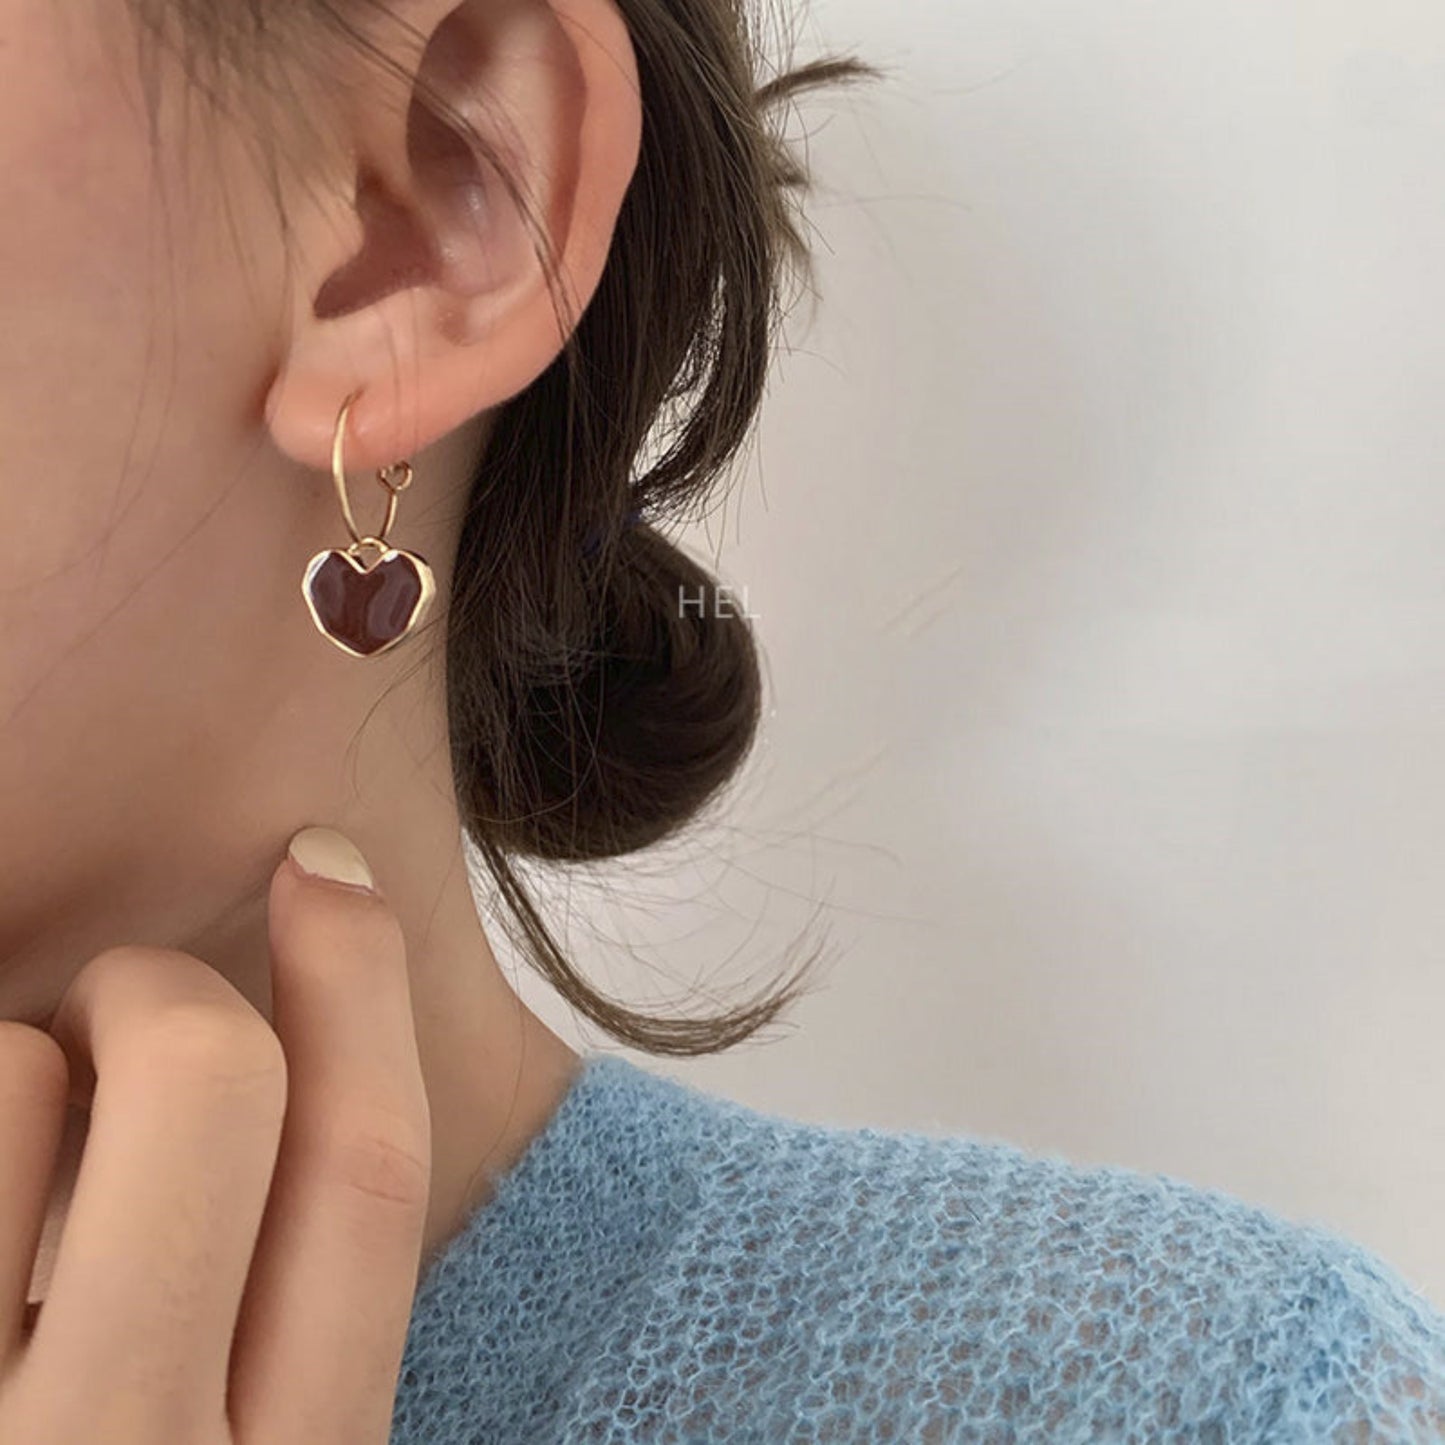 Burgundy Enamel Heart Earrings for Women